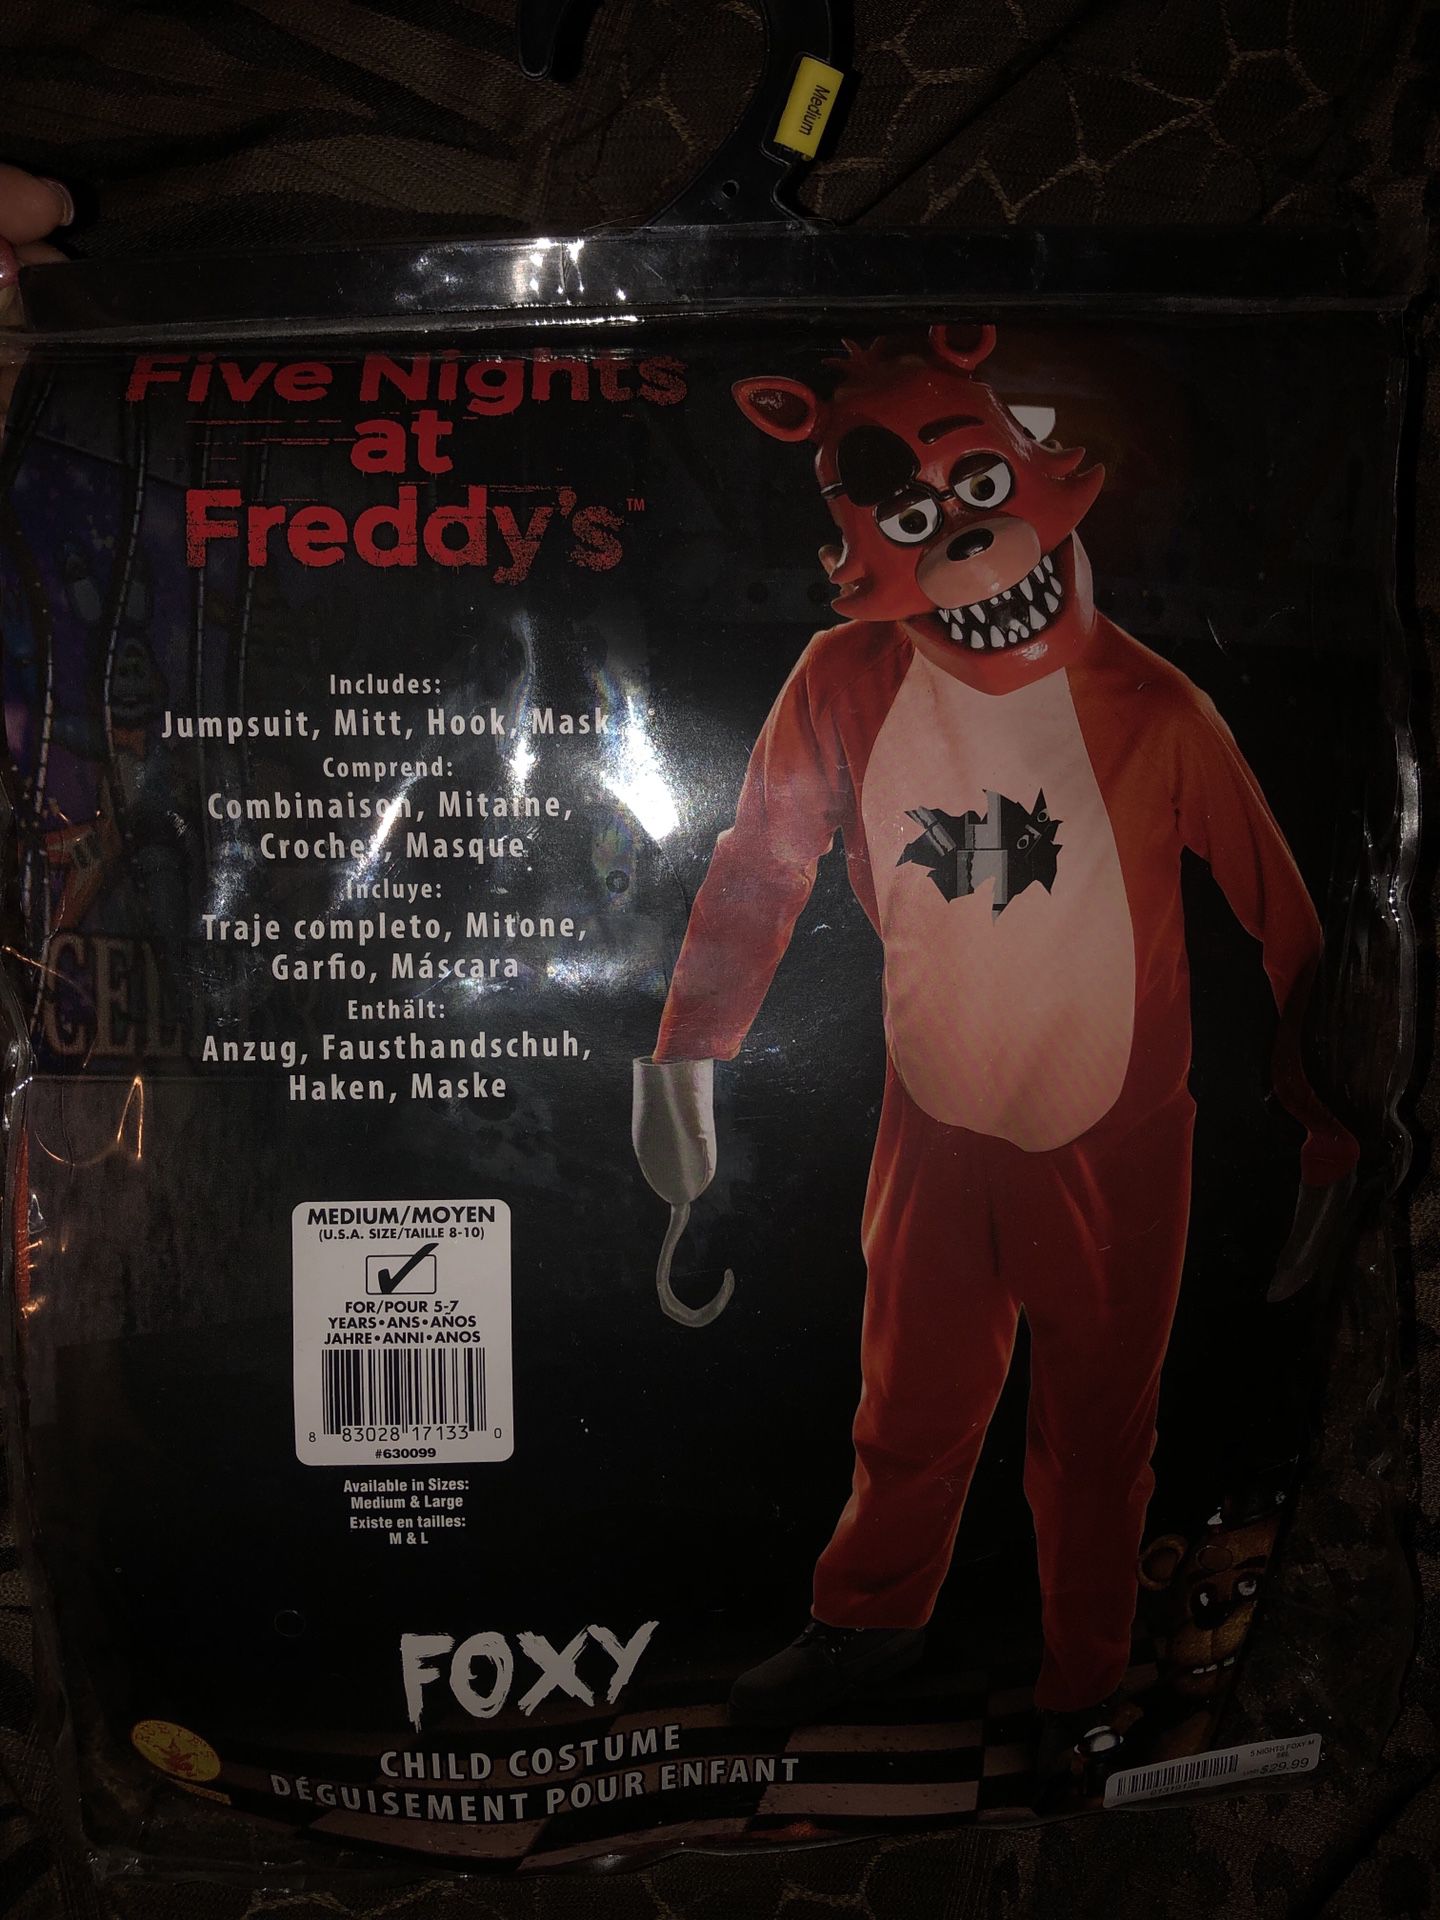 FOXY FIVE NIGHT AT FREDDYS COSTUME